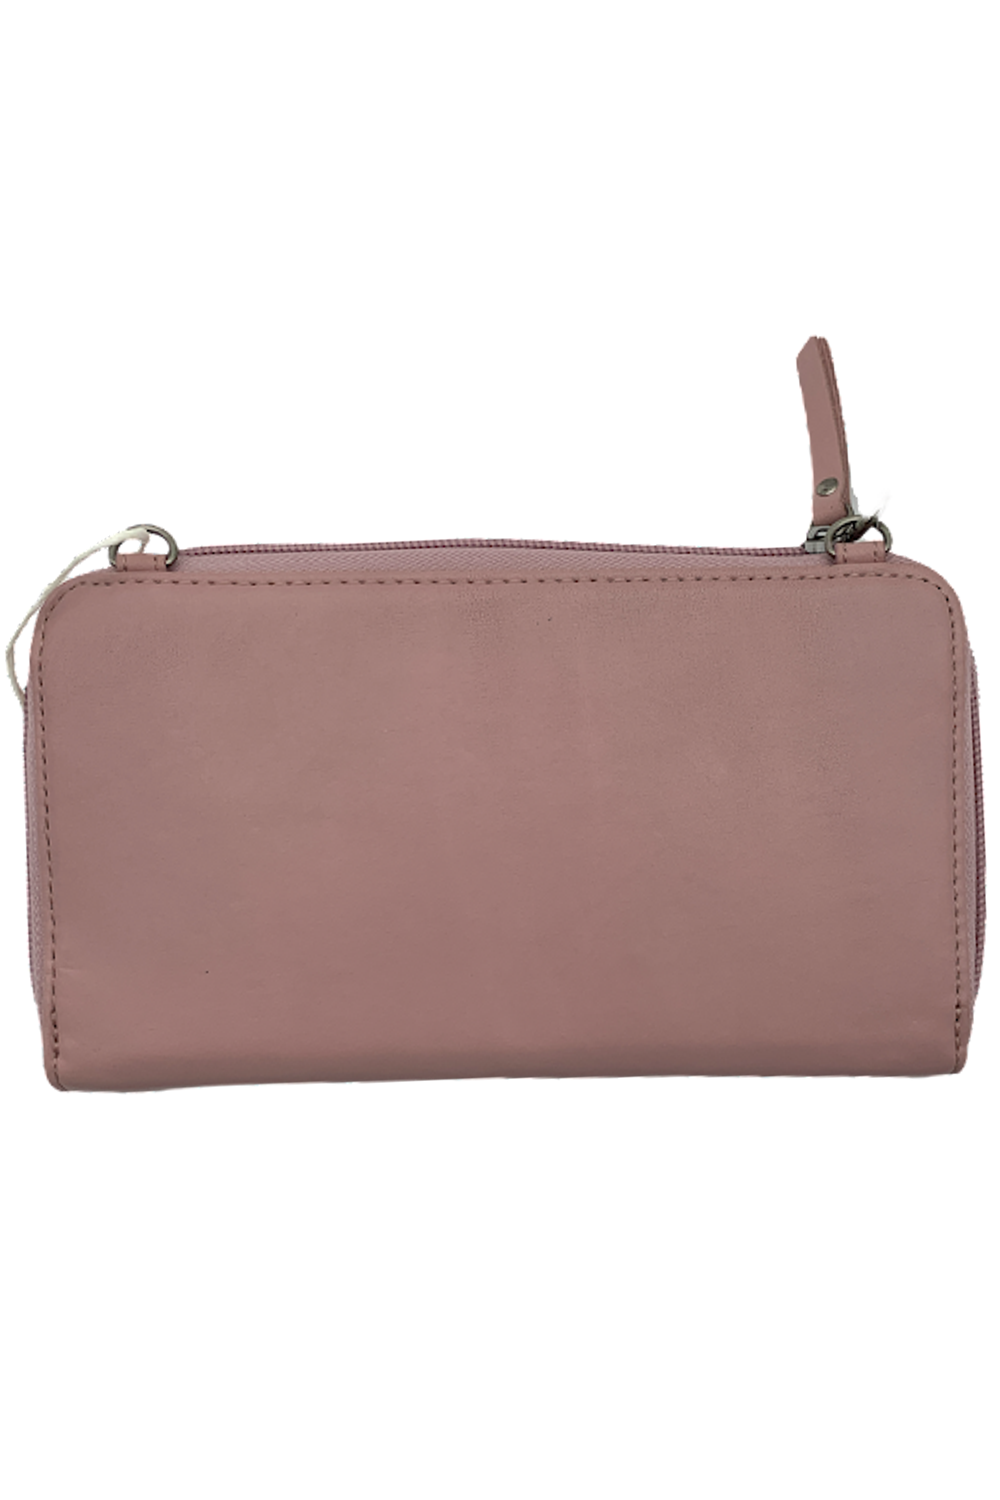 The Sak Iris Large Smartphone Crossbody Bag in Leather, Detachable Wristlet  Strap